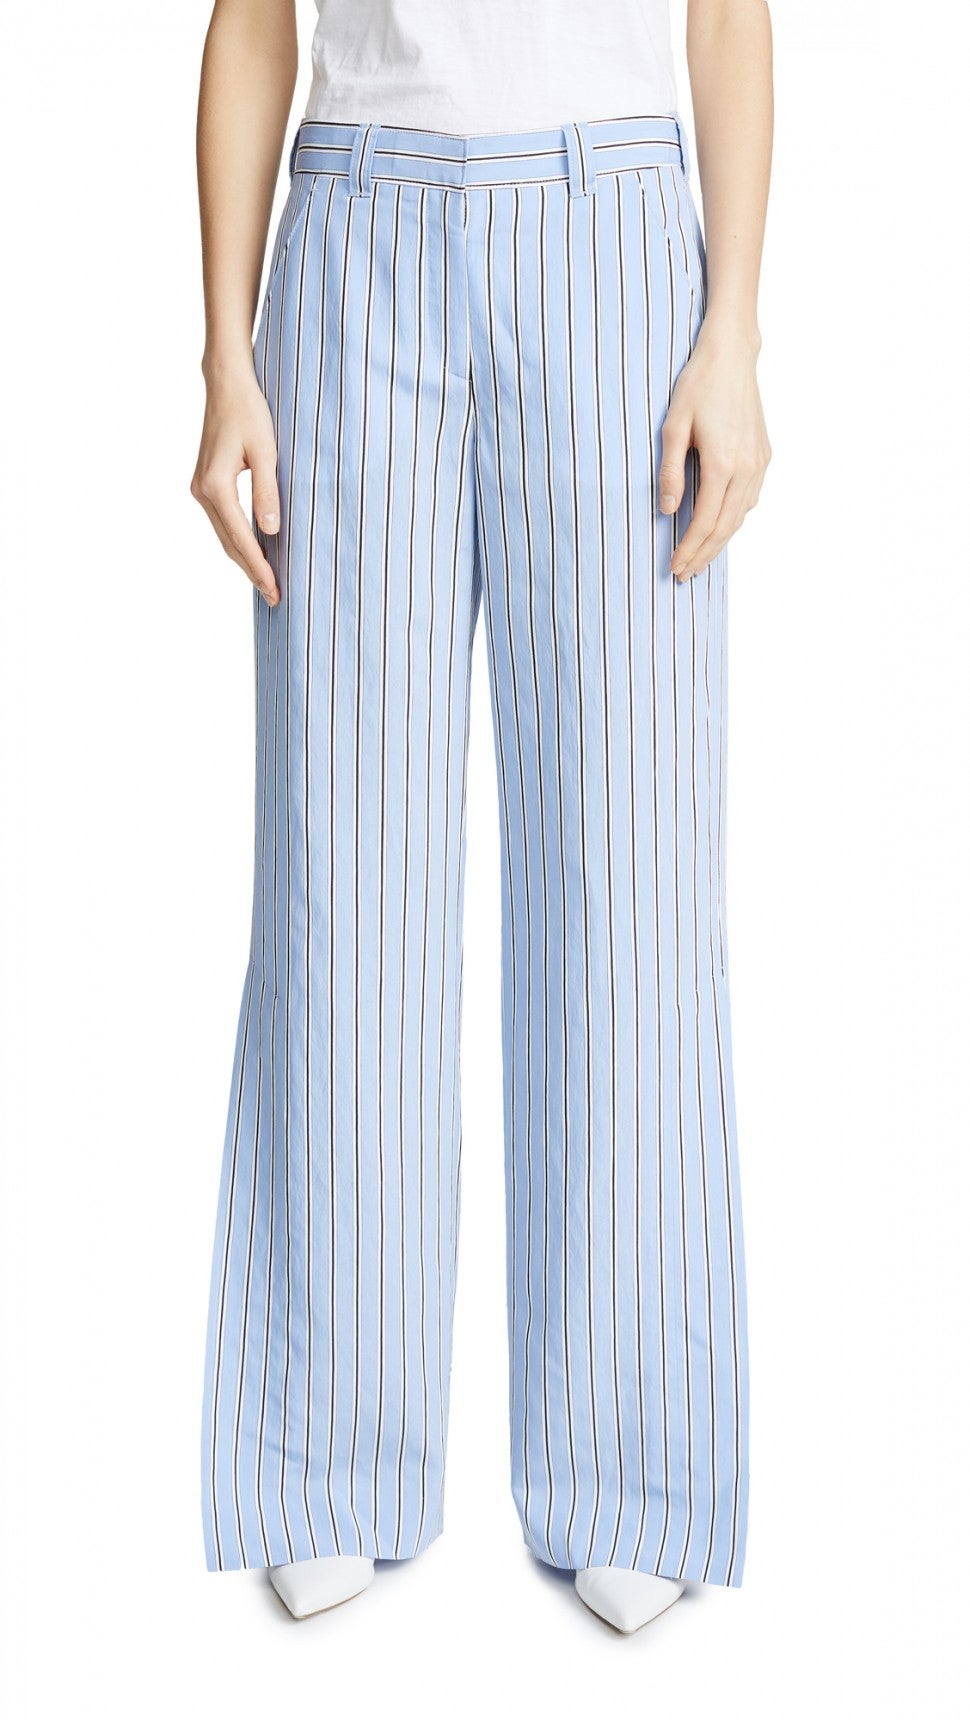 ALC striped pants